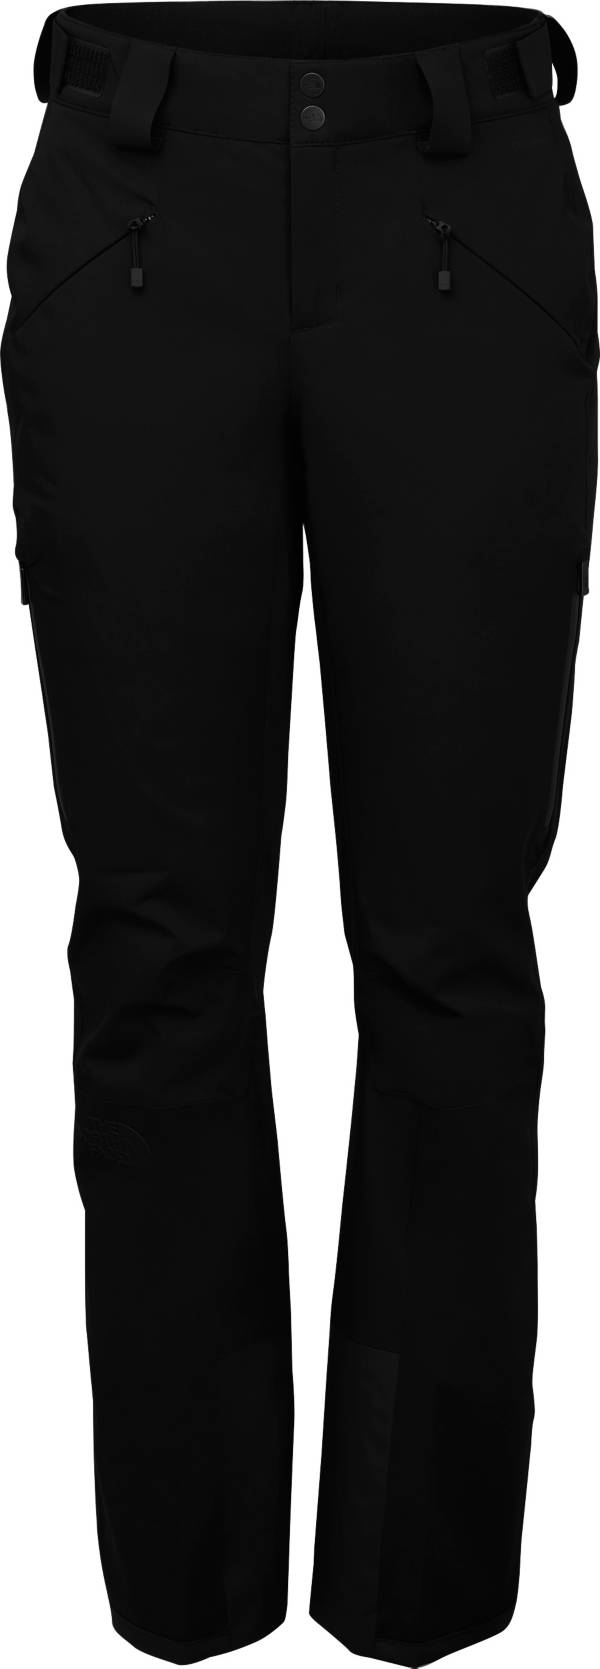 The North Face Women's Lenado Pants product image